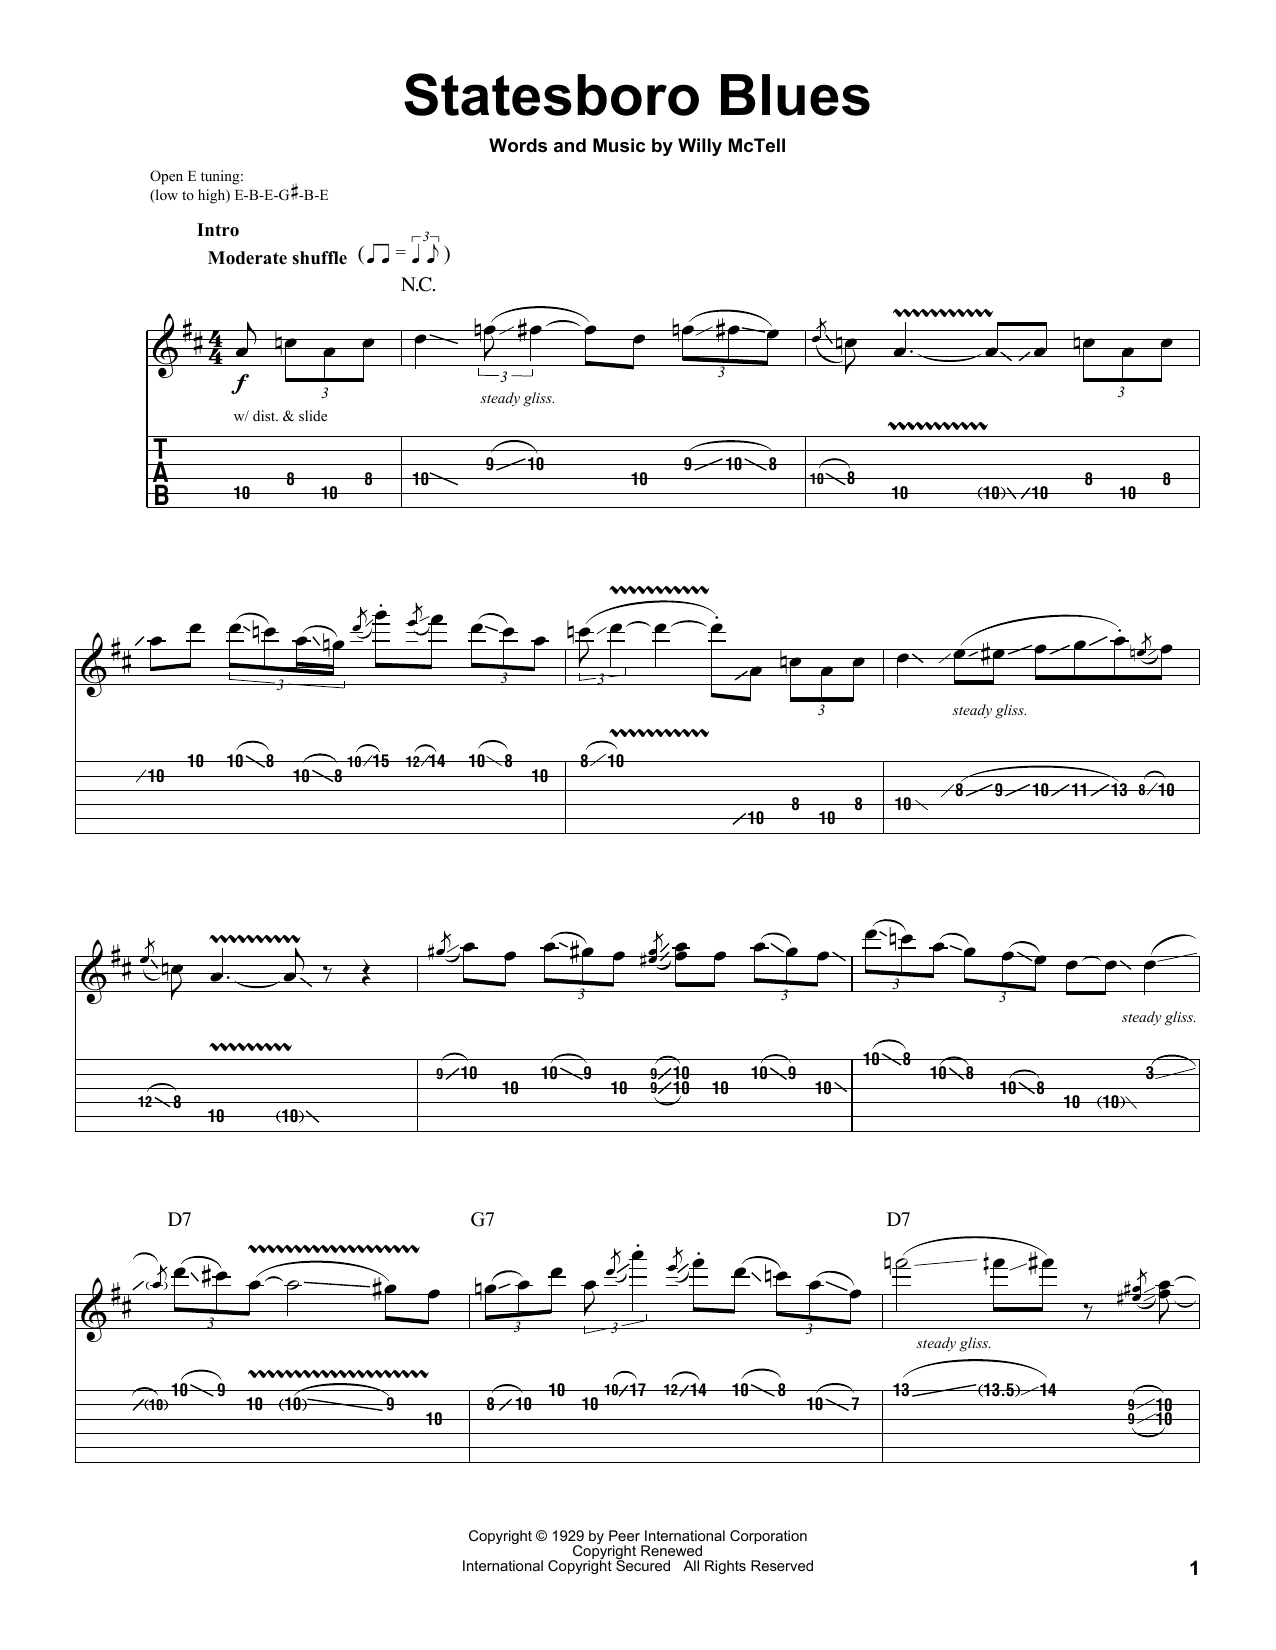 Allman Brothers Band Statesboro Blues Sheet Music Notes & Chords for Guitar Tab Play-Along - Download or Print PDF